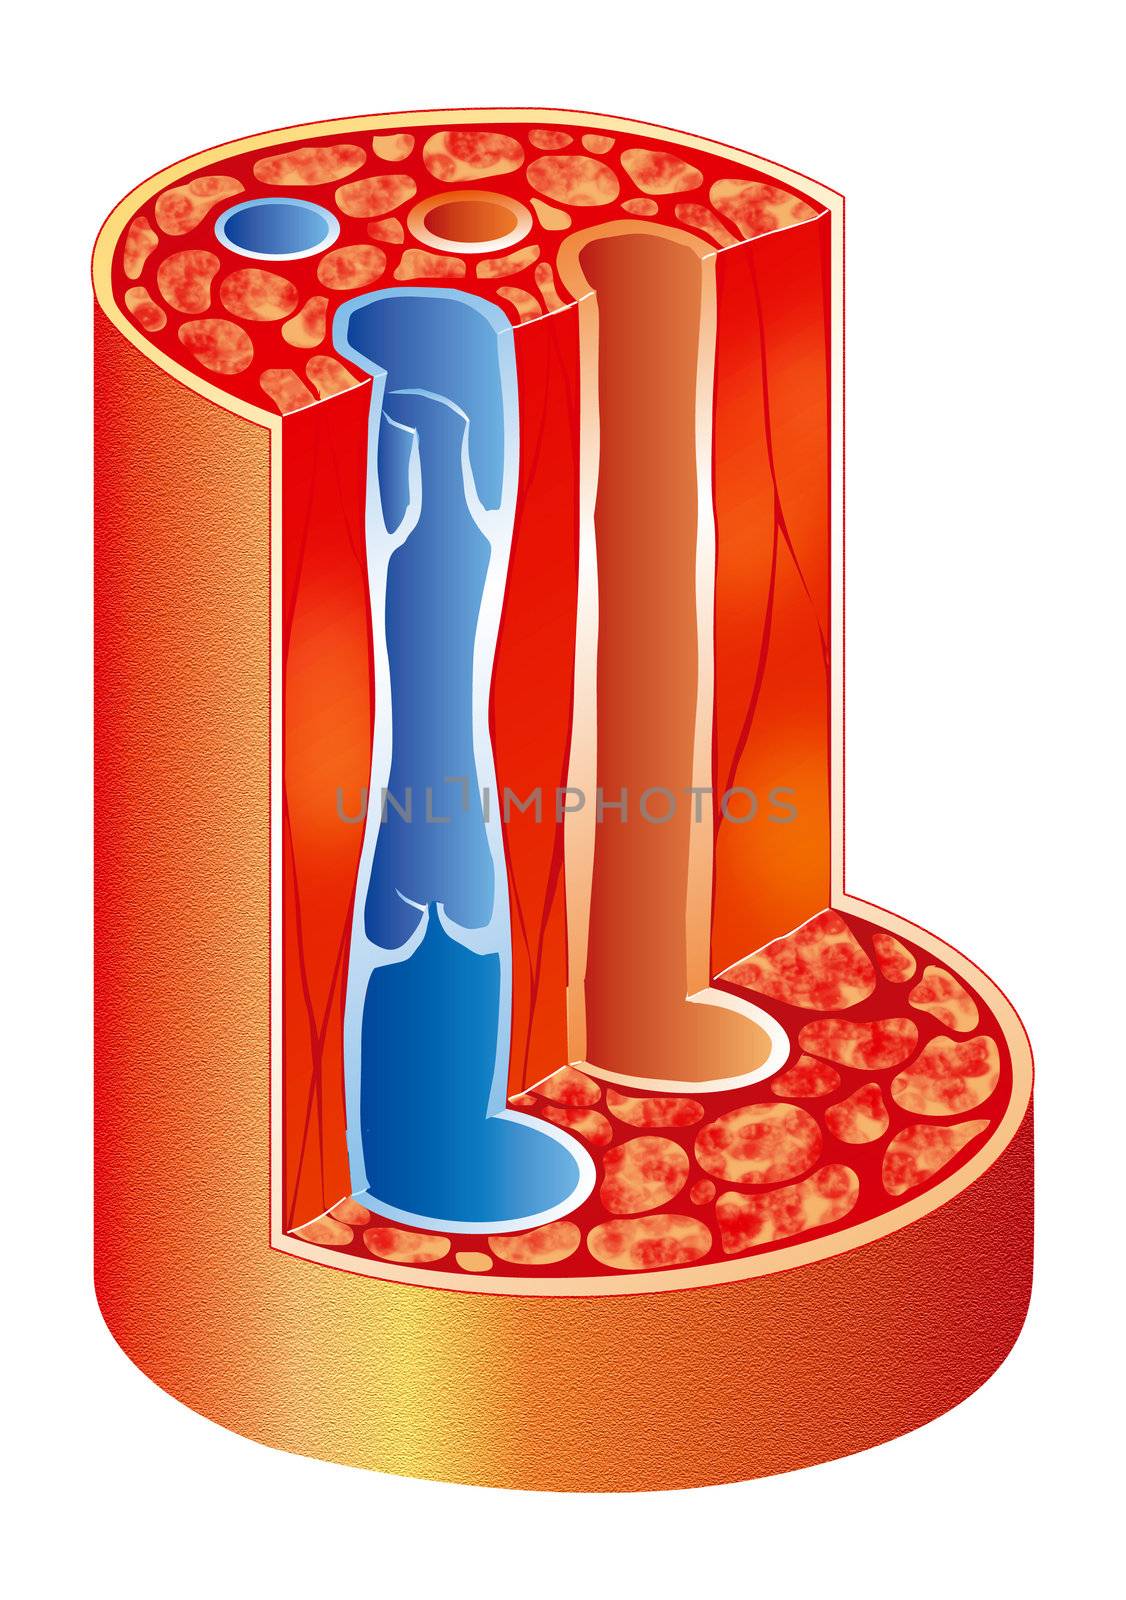 vein and artery by alexonline